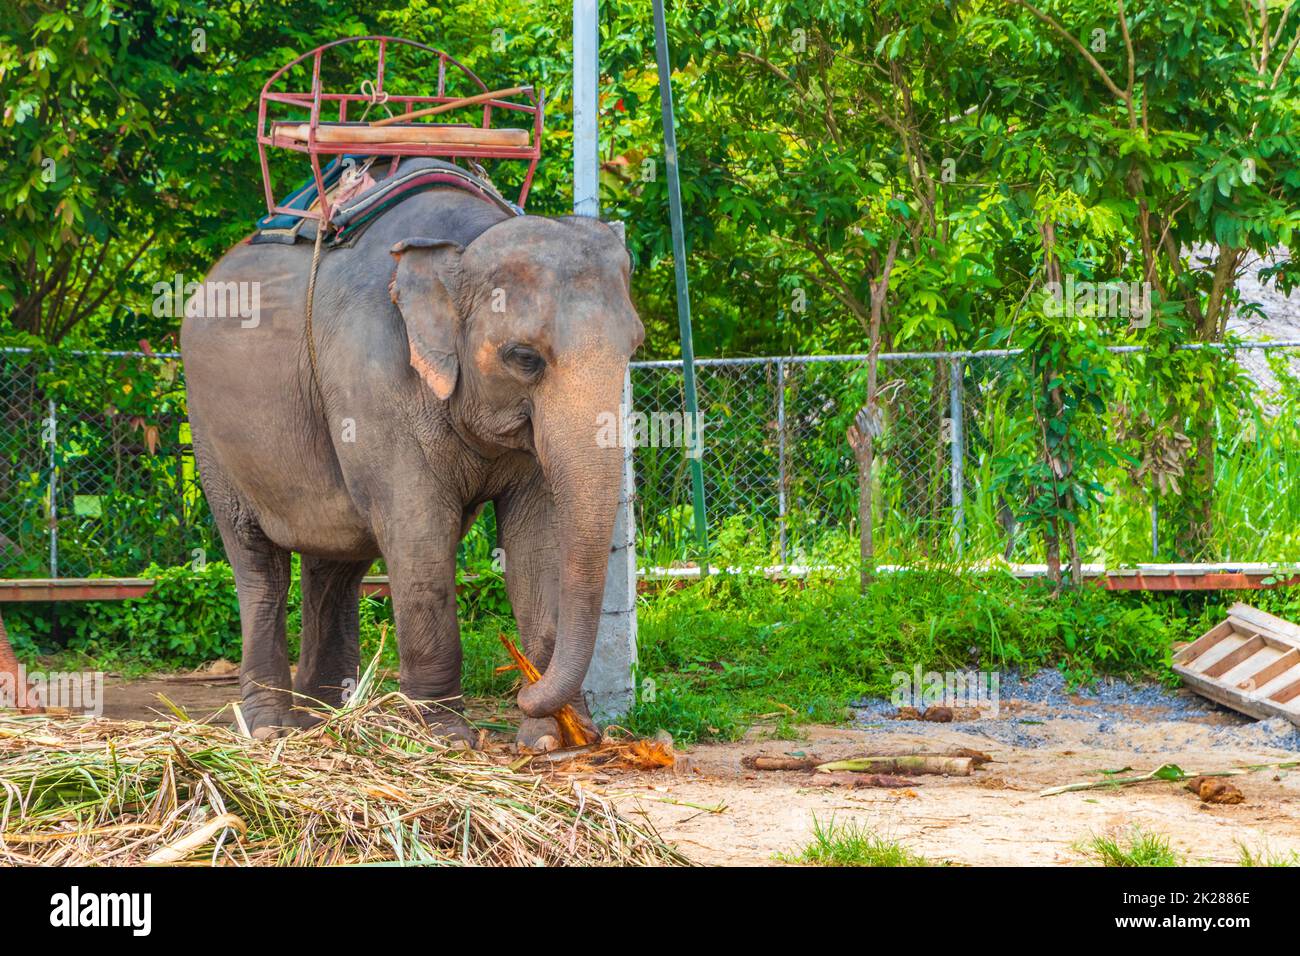 Asian elephants for riding tropical rainforest park Koh Samui Thailand. Stock Photo